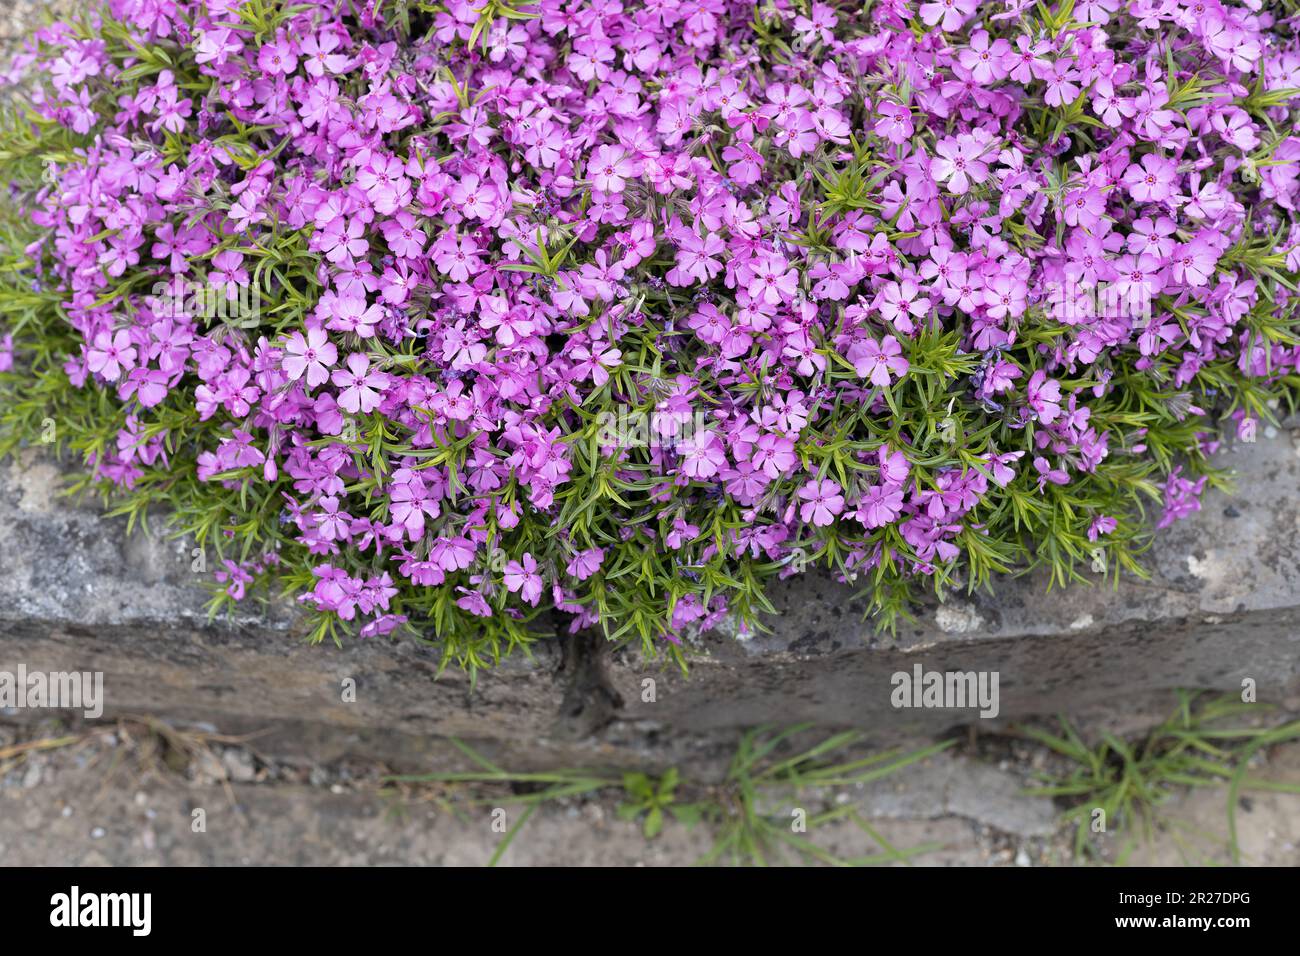 Phlox douglasii 'Crackerjack' flowers growing on a rock ledge. Stock Photo